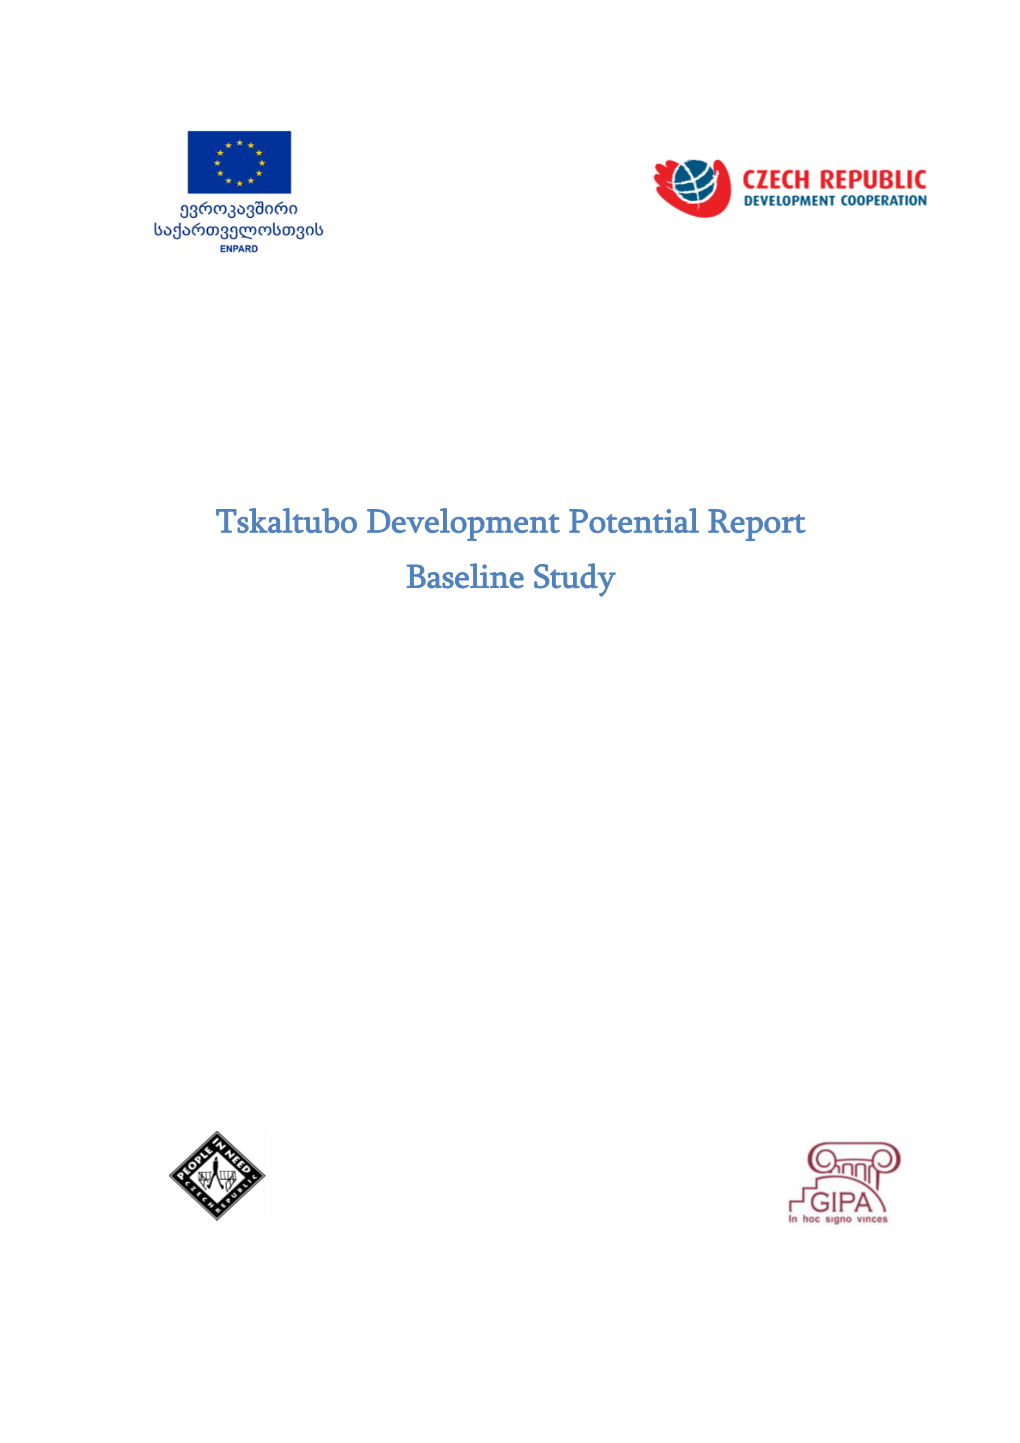 Tskaltubo Development Potential Report Baseline Study